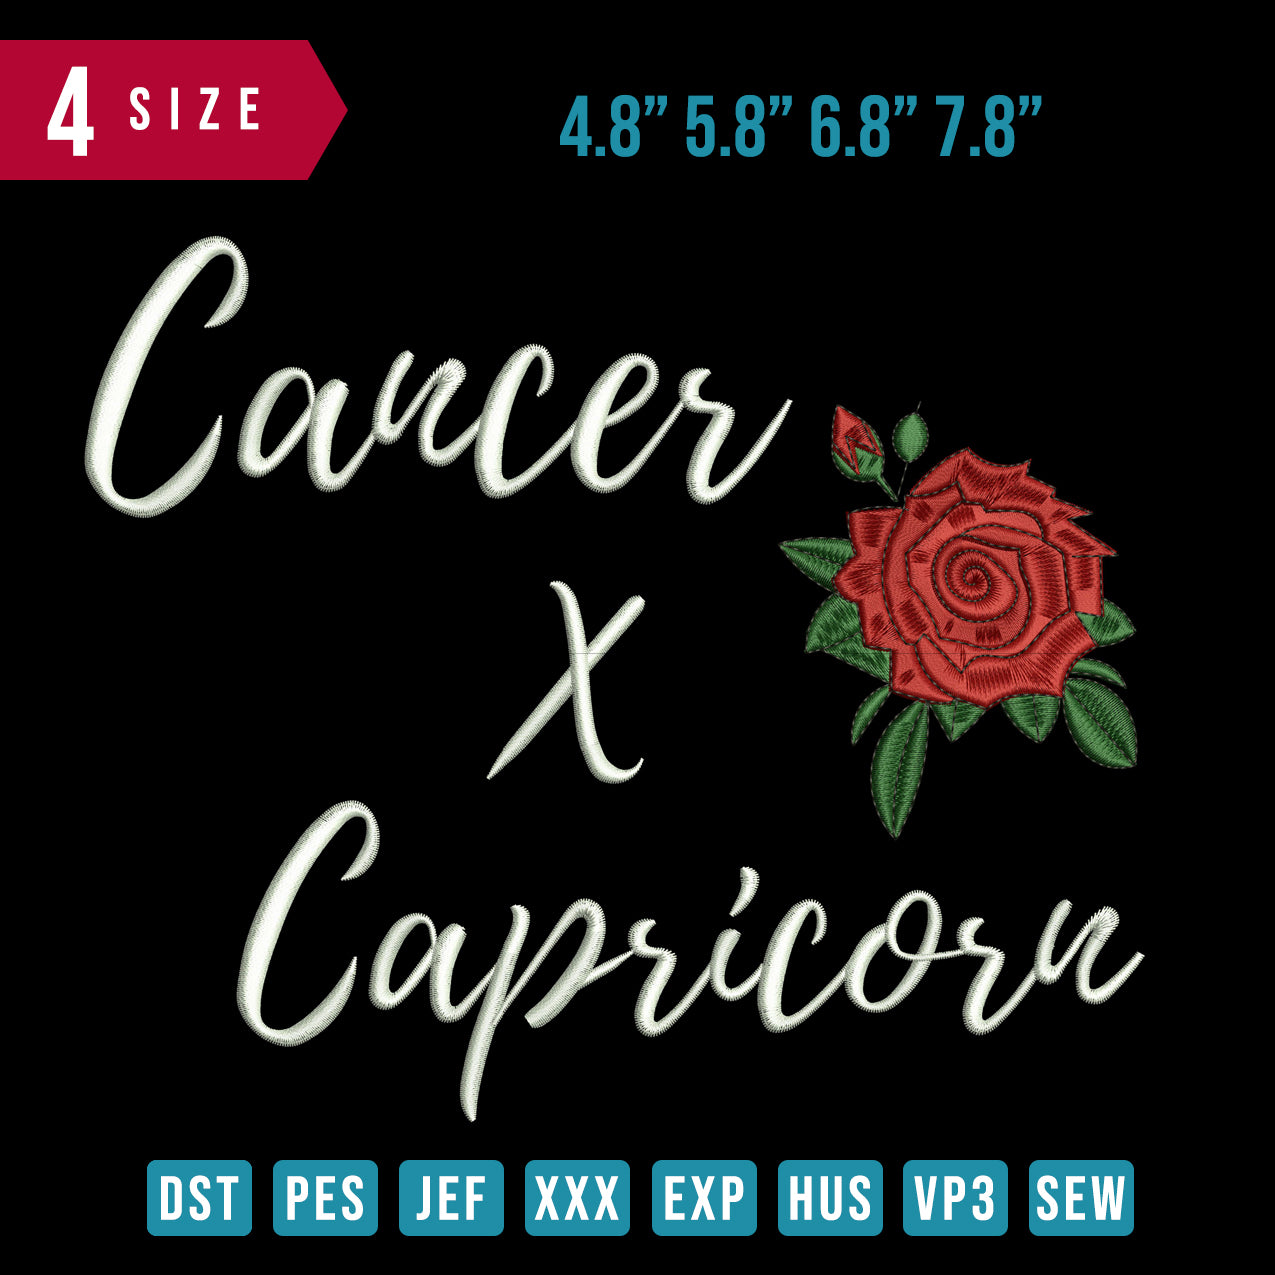 Cancer Capricorn